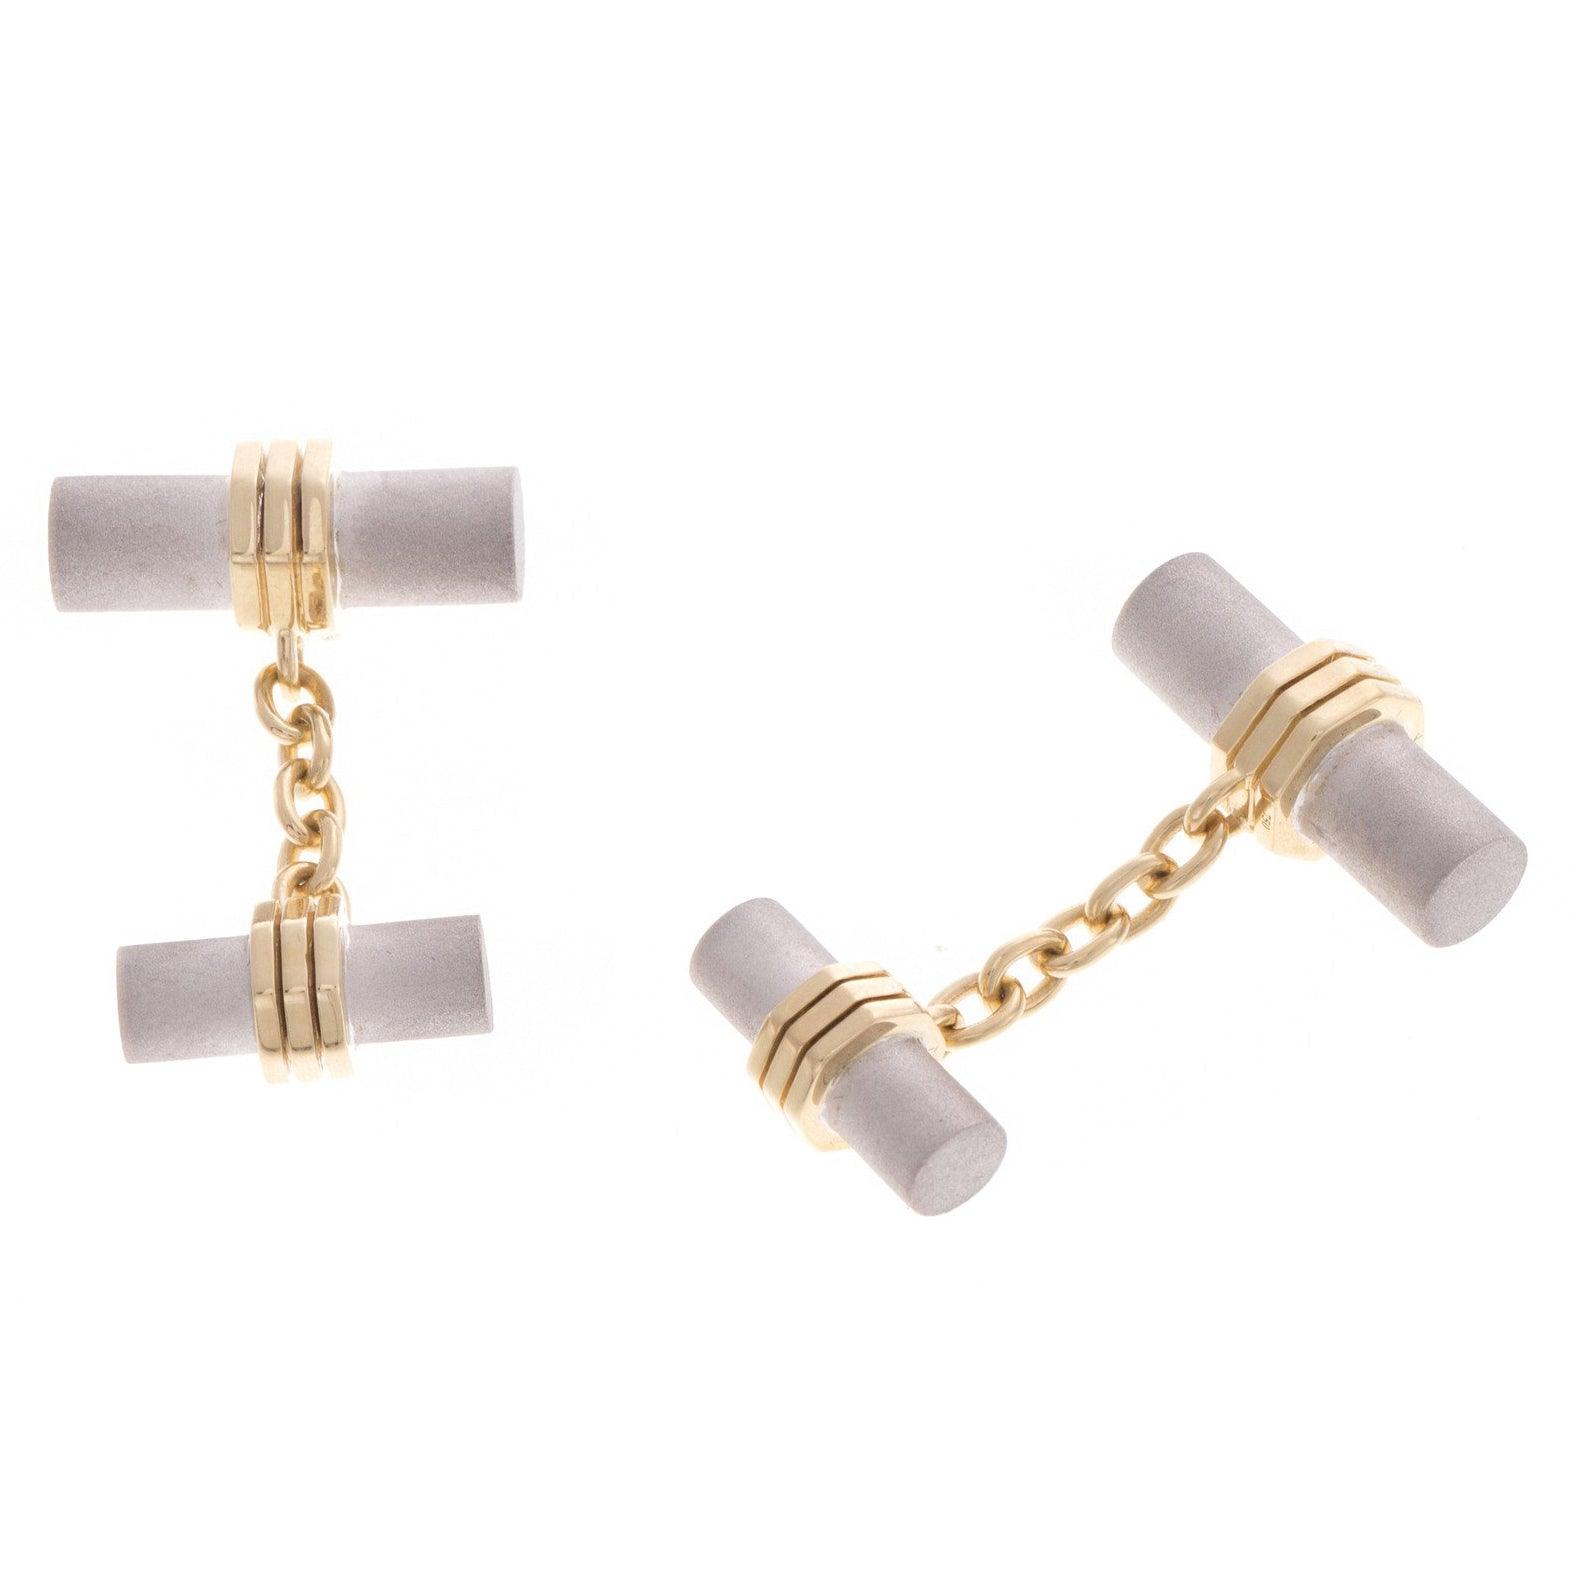 18ct White & Yellow Gold Men's Cufflinks CU-2537 - Minar Jewellers